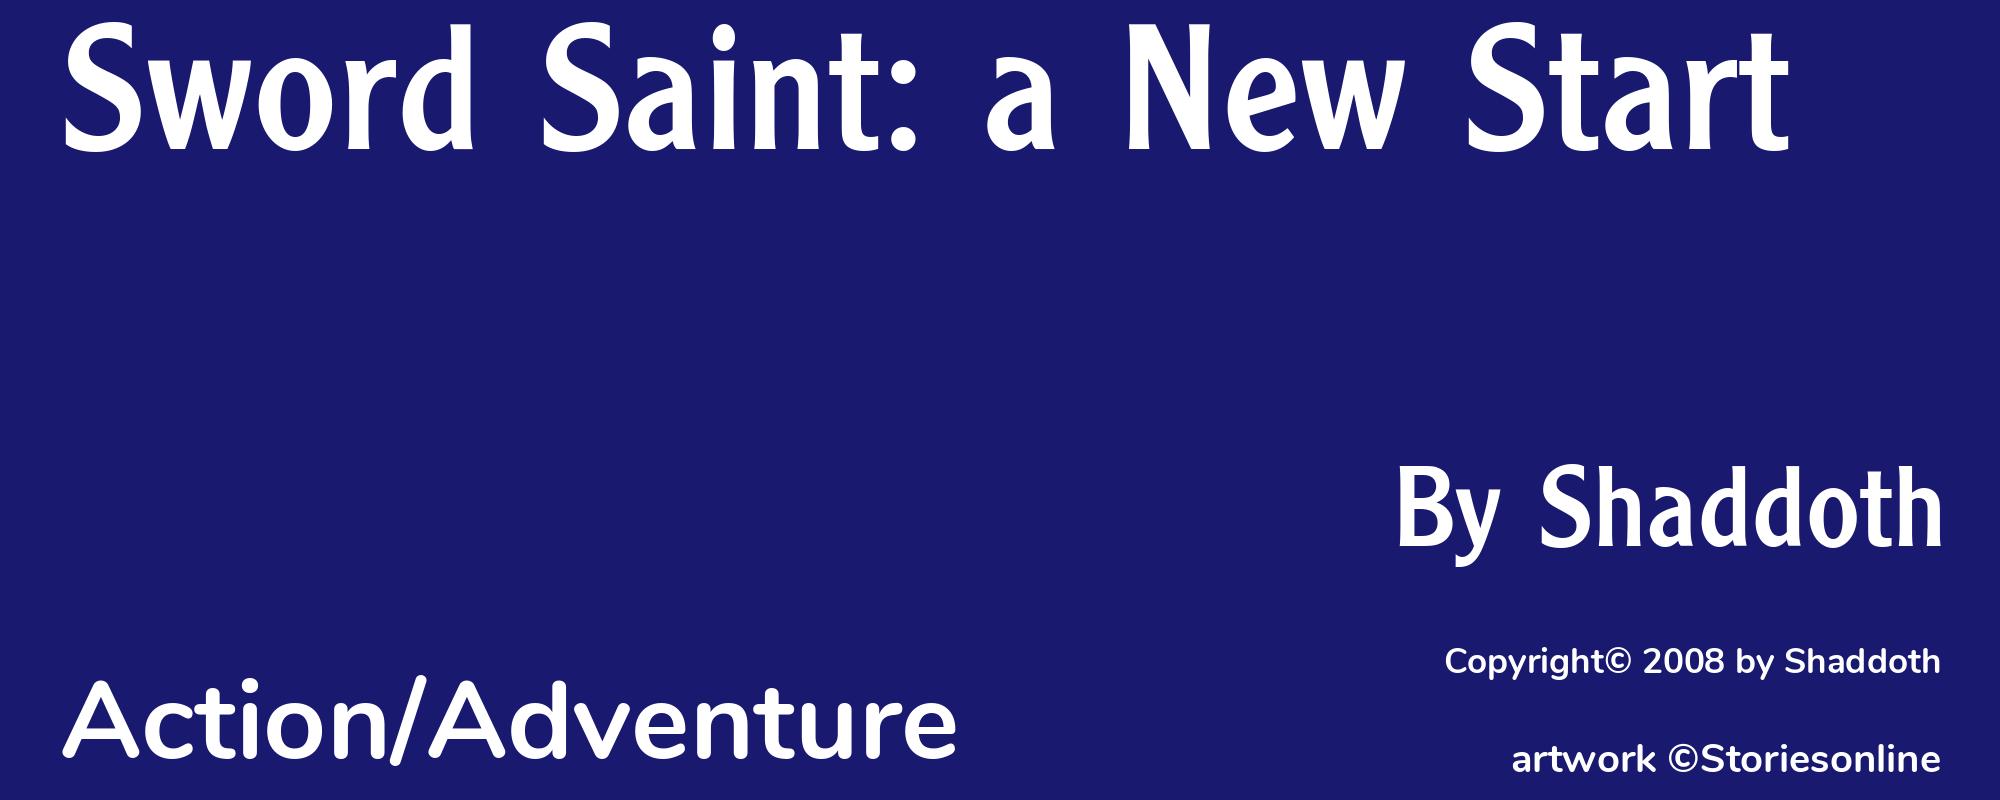 Sword Saint: a New Start - Cover